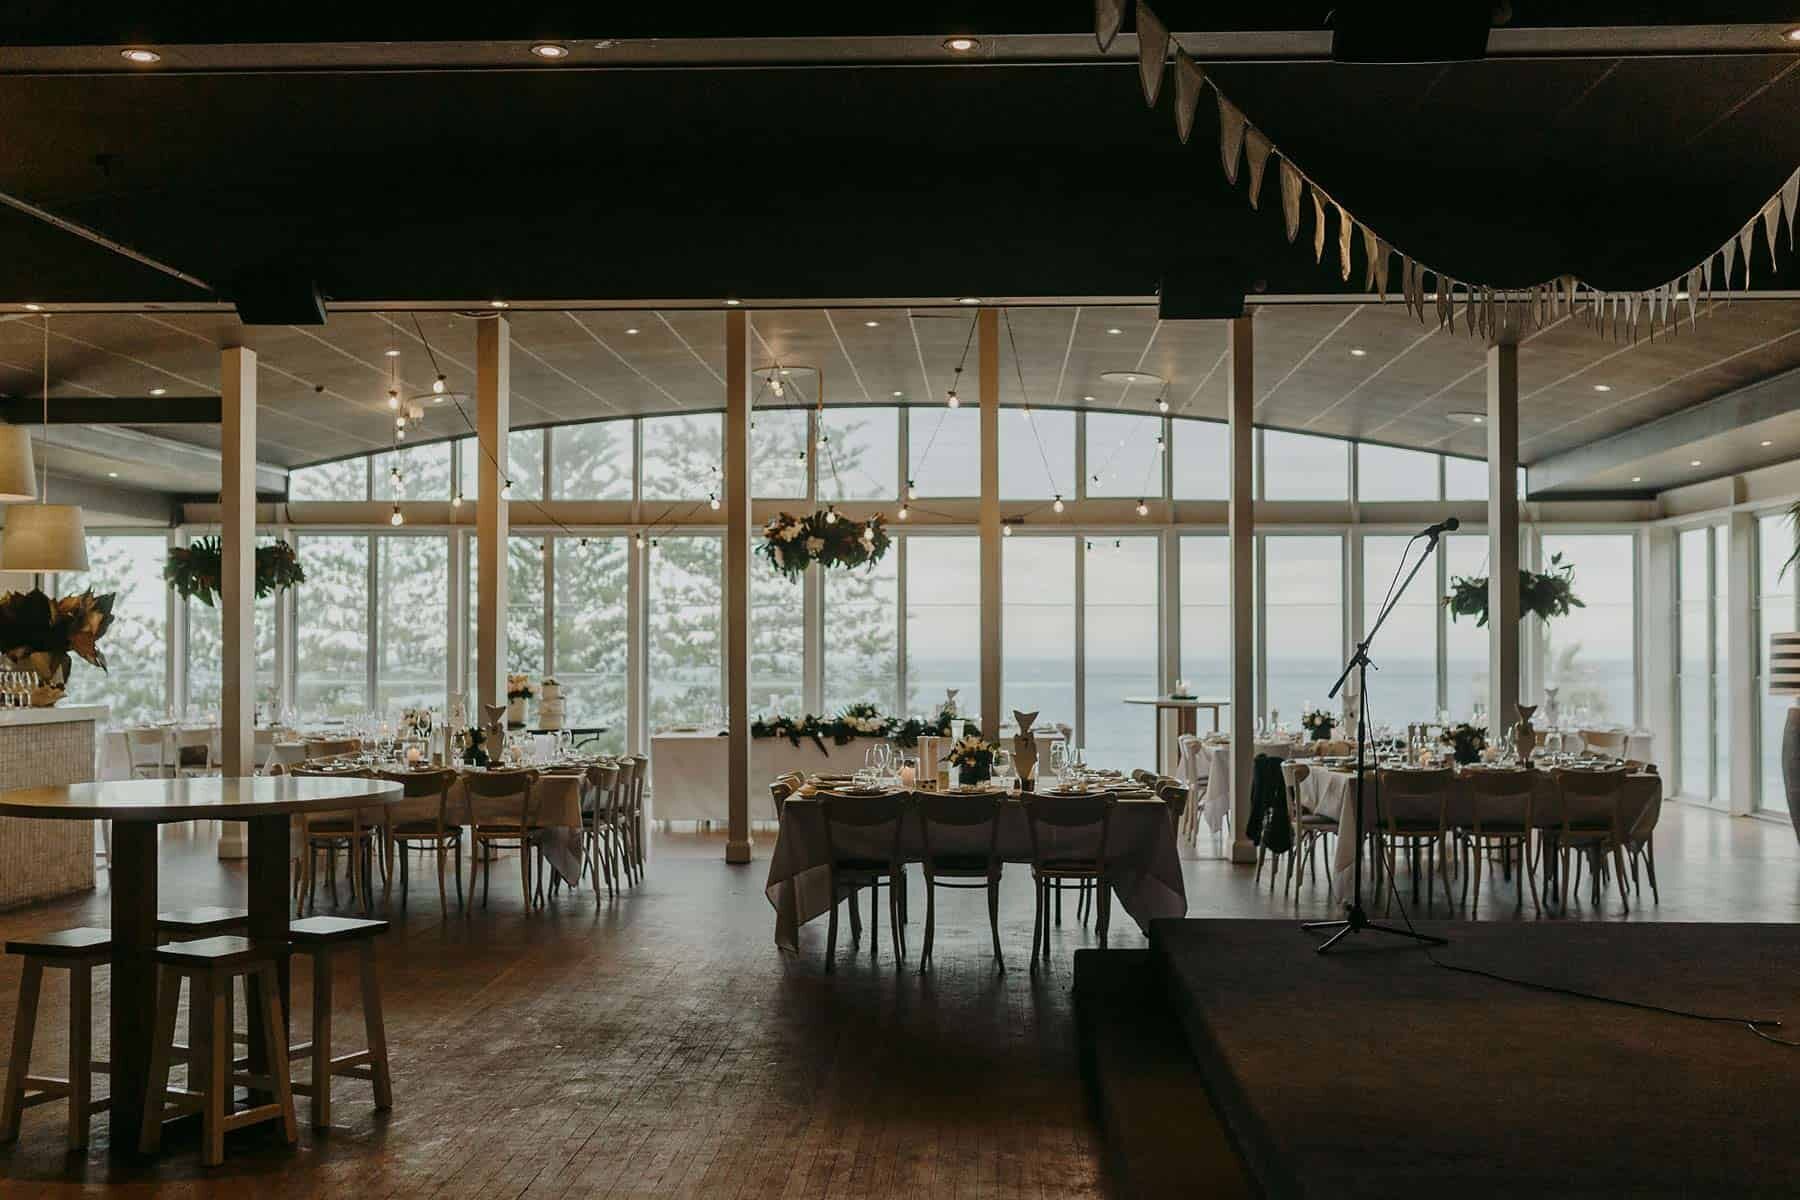 Modern Sydney wedding at Moby Dicks Whale Beach